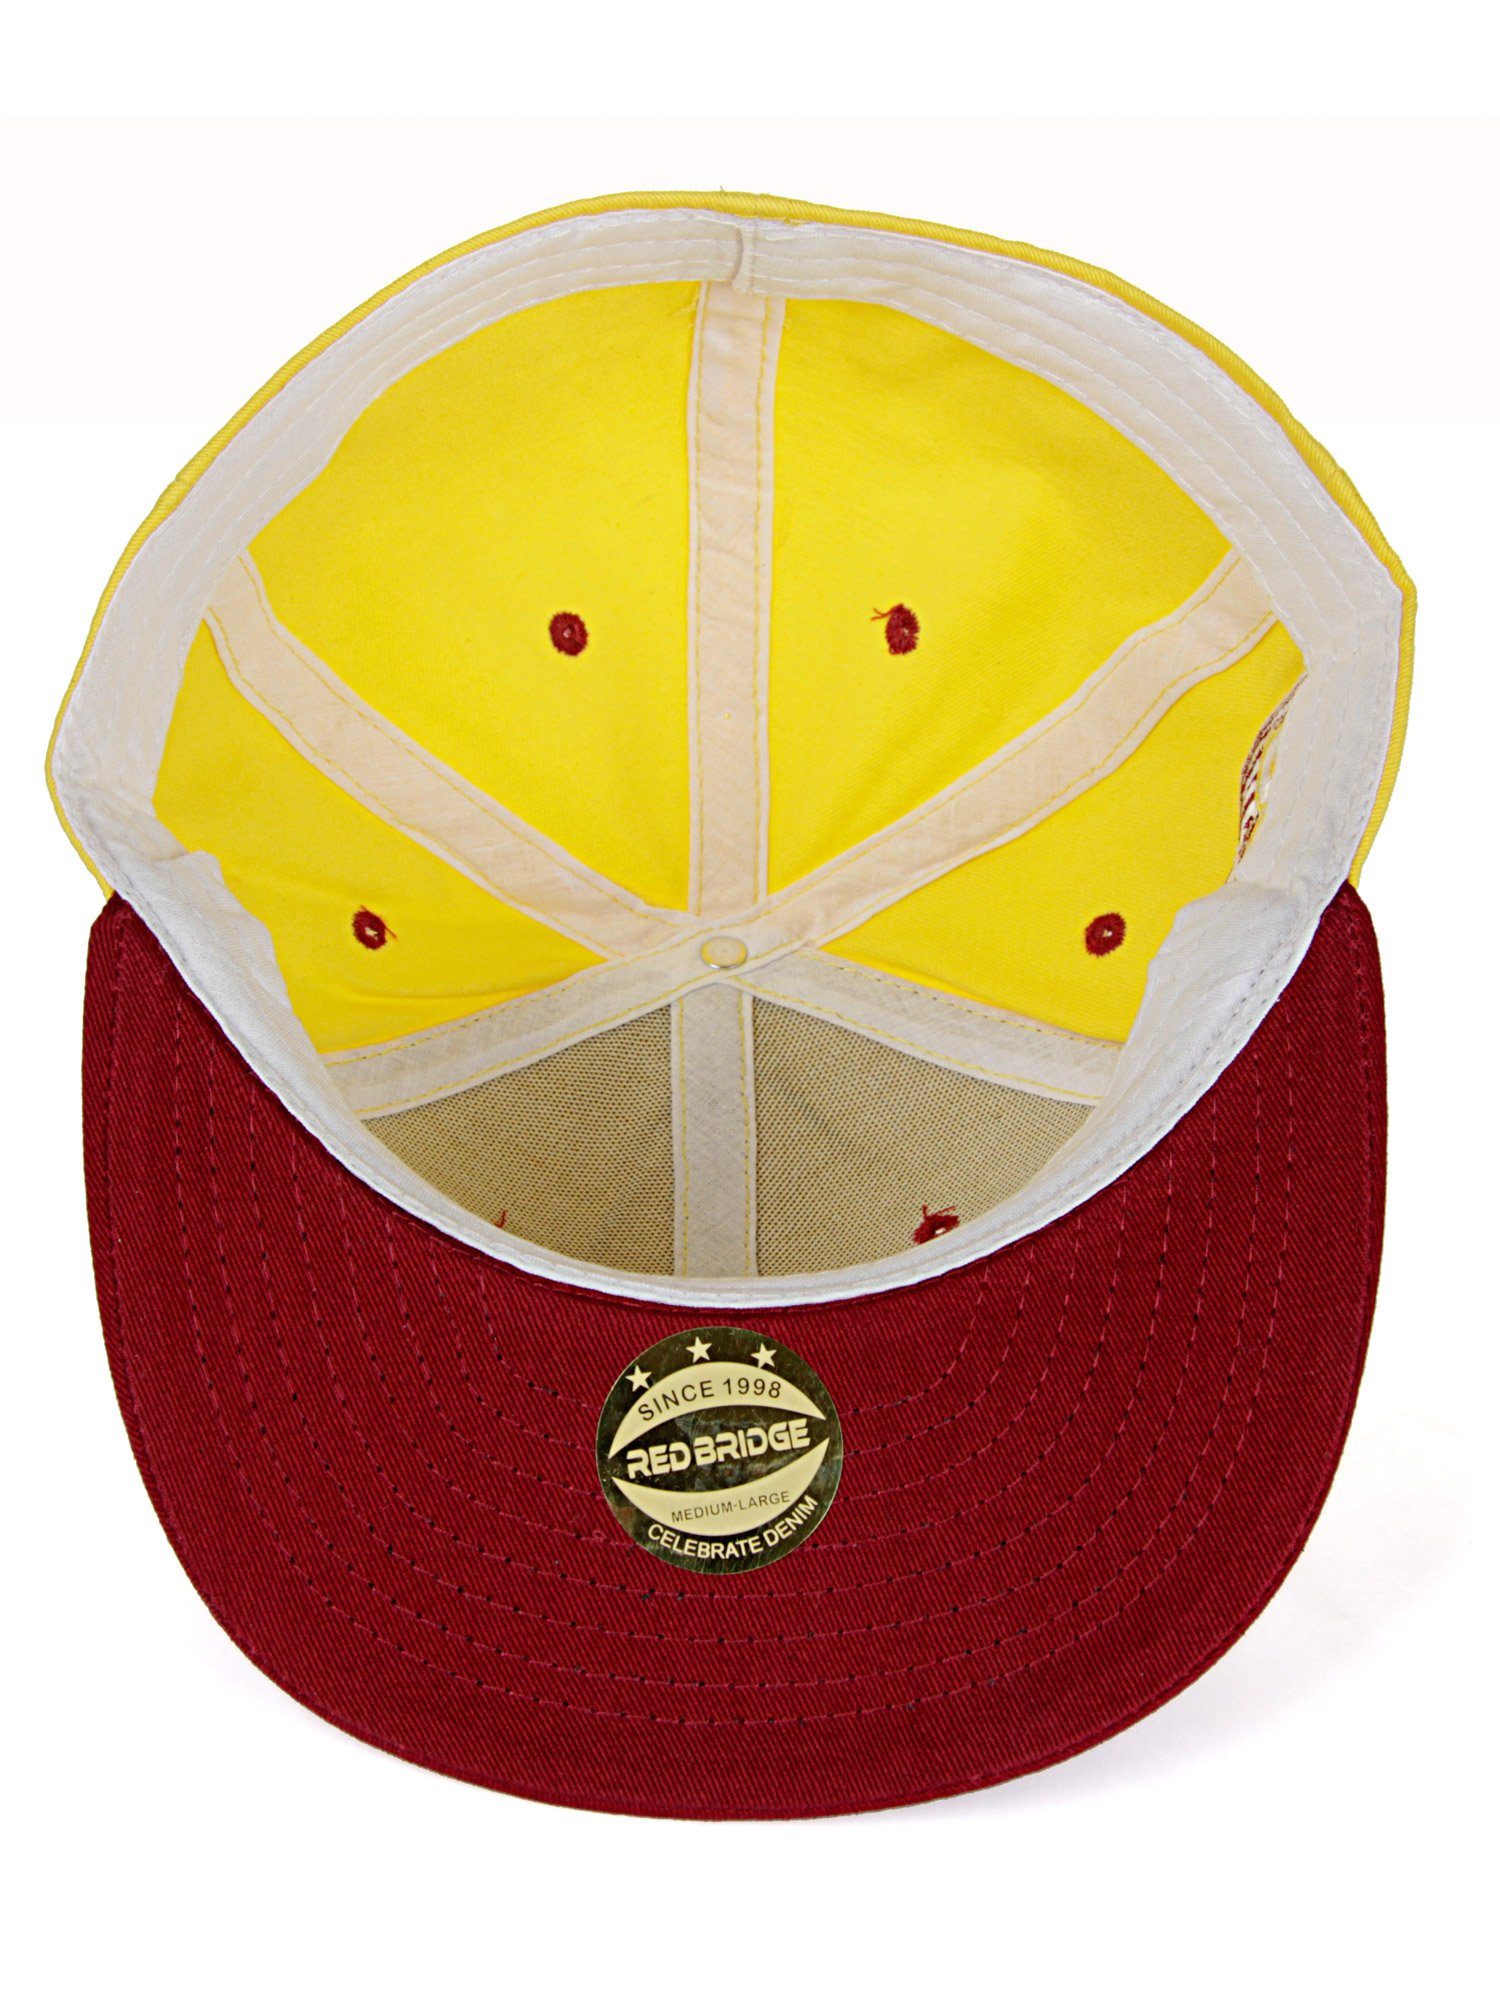 Durham kontrastfarbigem gelb-rot Baseball mit Schirm RedBridge Cap